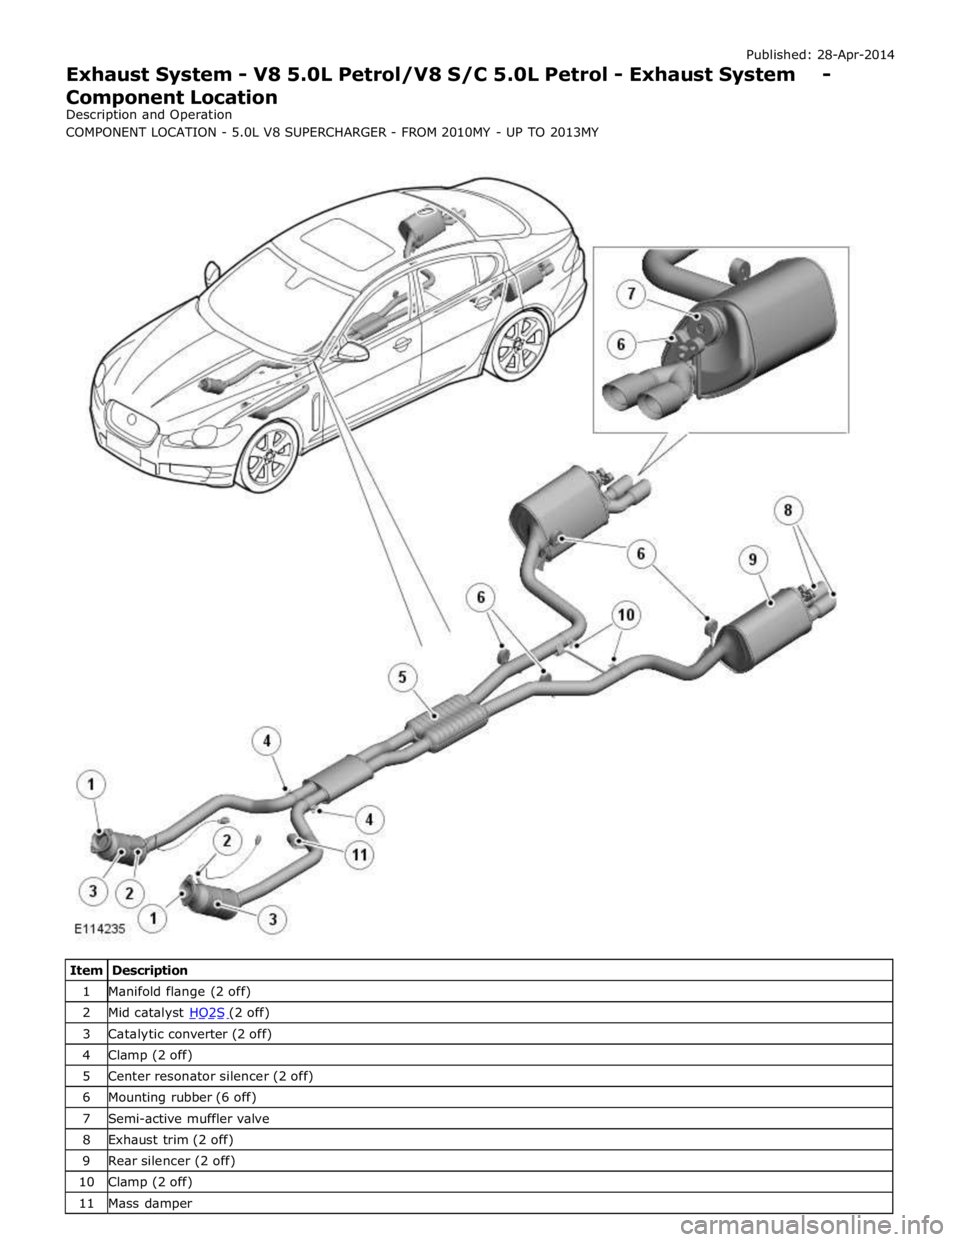 JAGUAR XFR 2010 1.G User Guide Published: 28-Apr-2014 
Exhaust System - V8 5.0L Petrol/V8 S/C 5.0L Petrol - Exhaust System - Component Location 
Description and Operation 
 
              
 
 
 
  
     
         
     
    
      